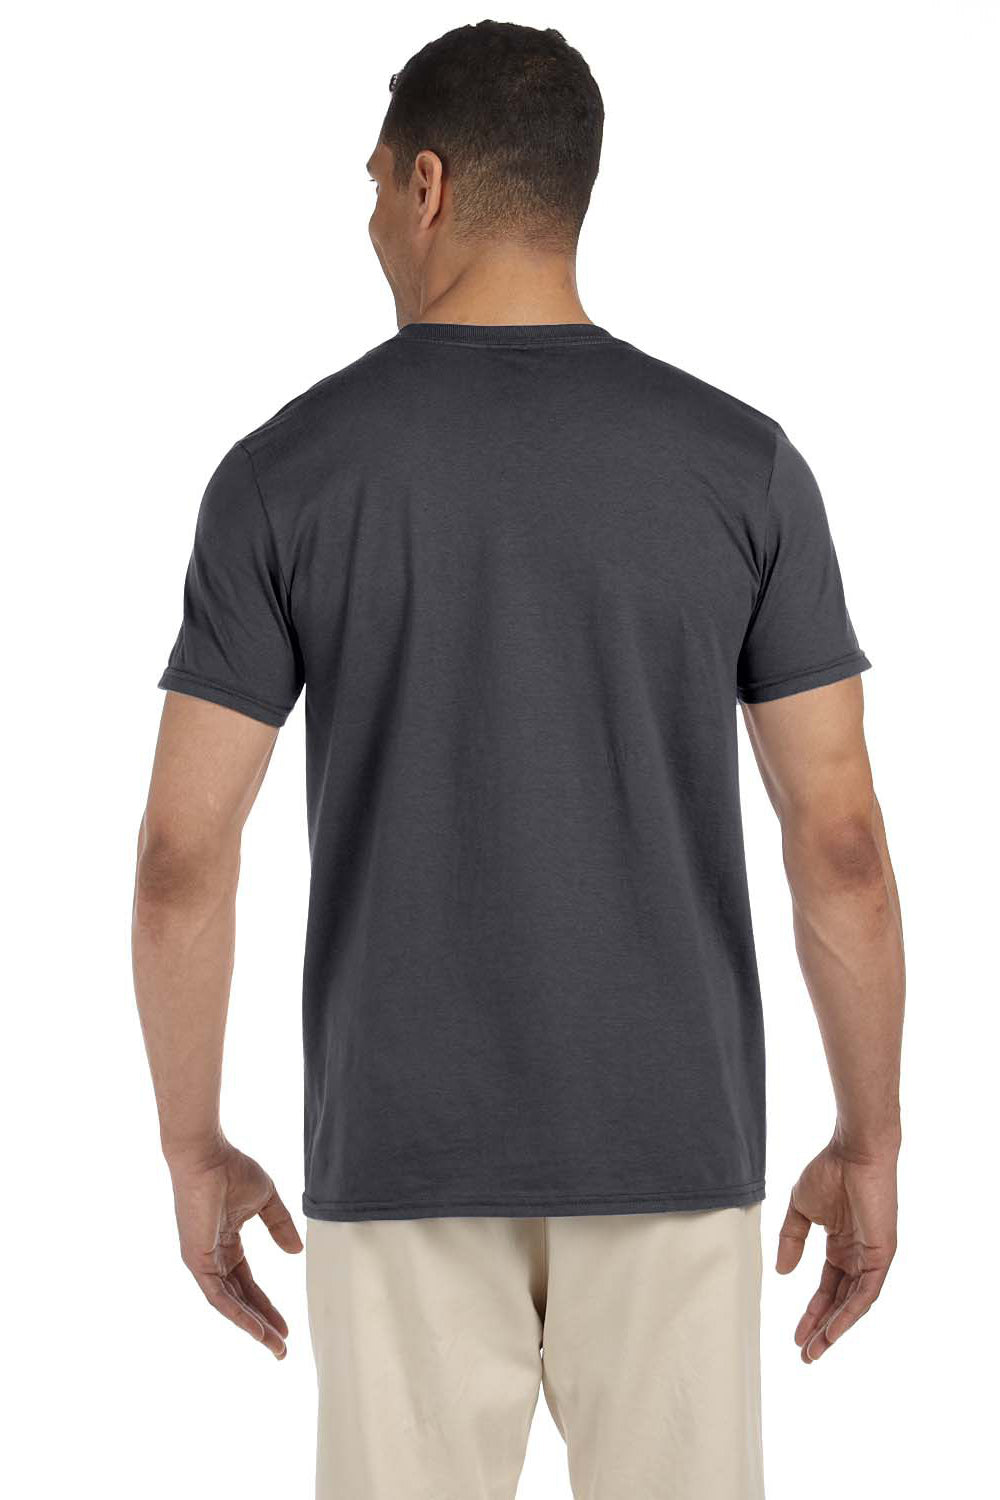 Gildan G640 Mens Softstyle Short Sleeve Crewneck T-Shirt Charcoal Grey Back